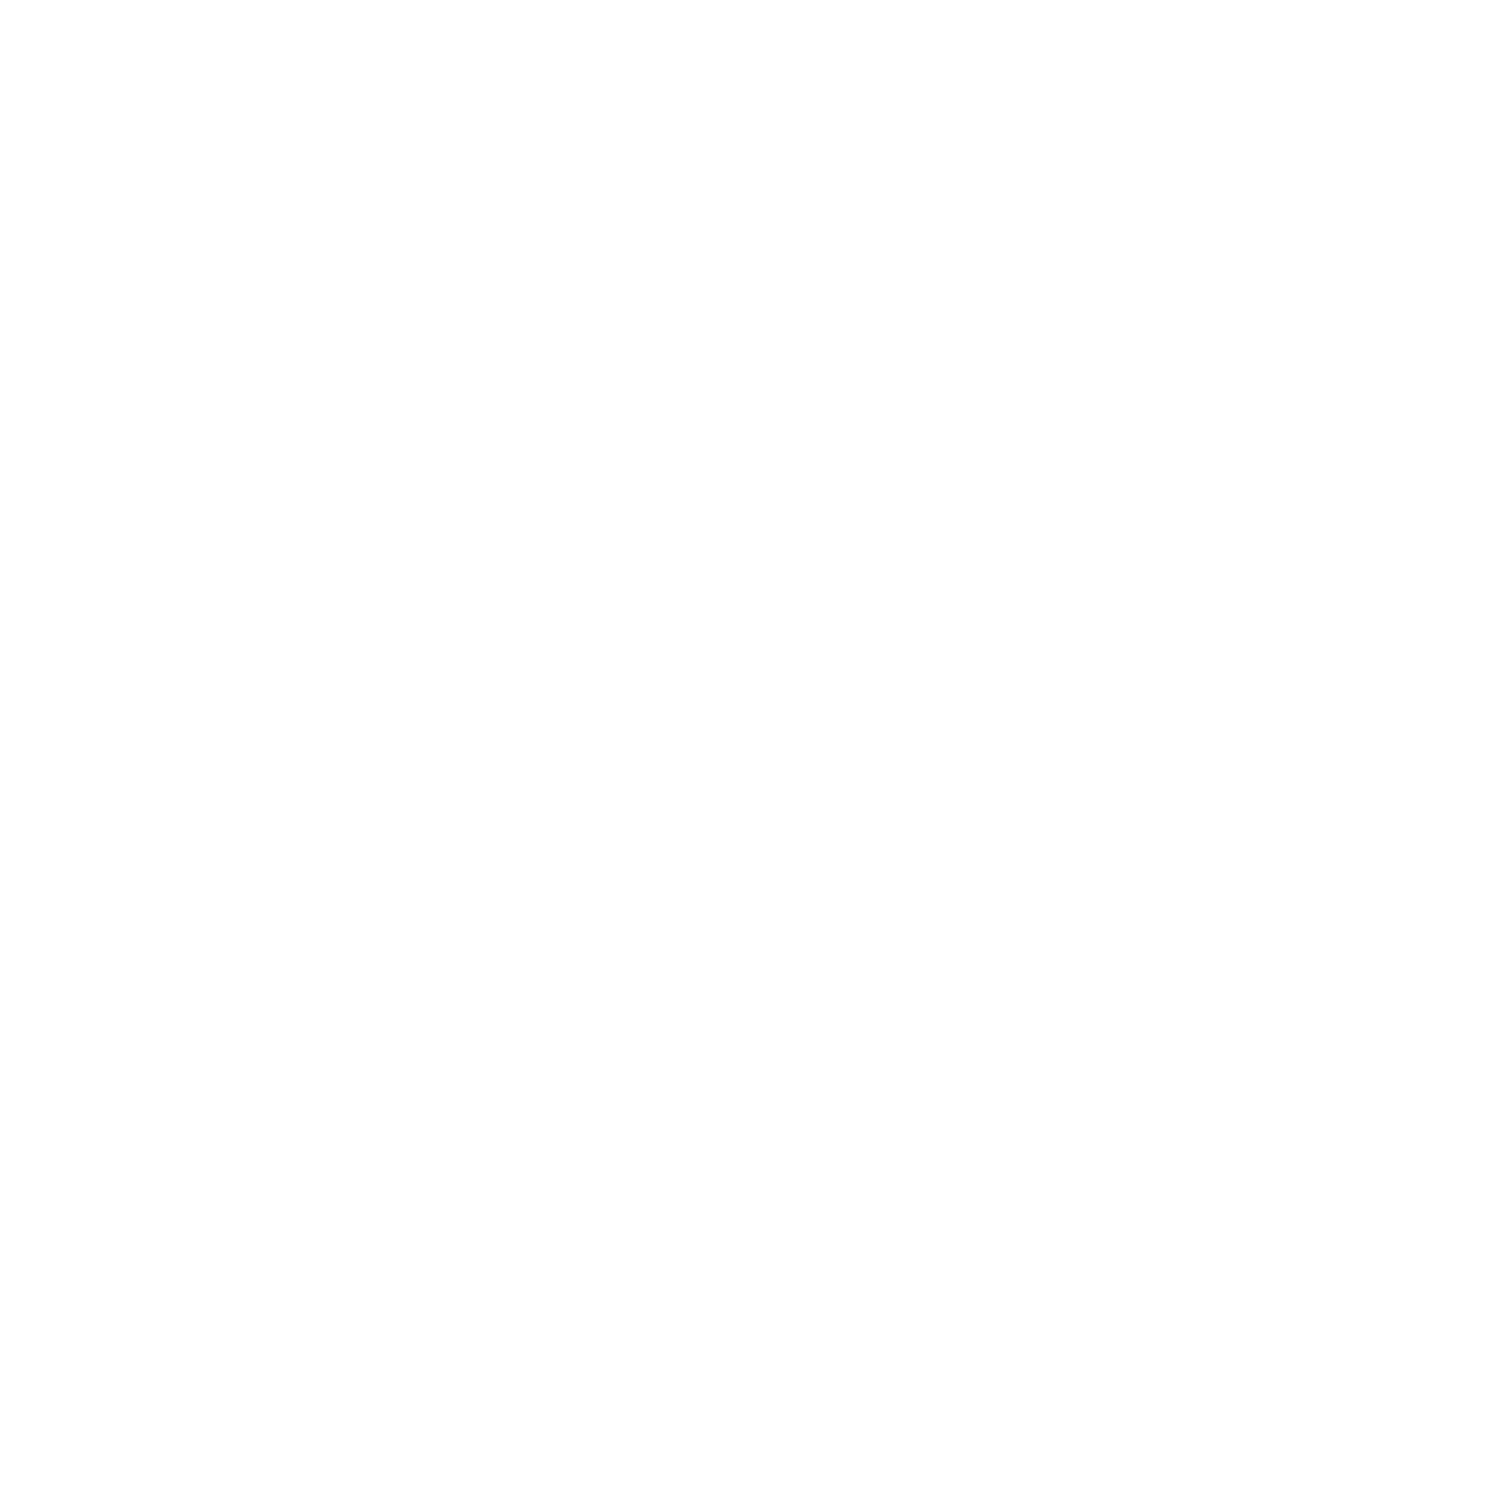 Illinois Local